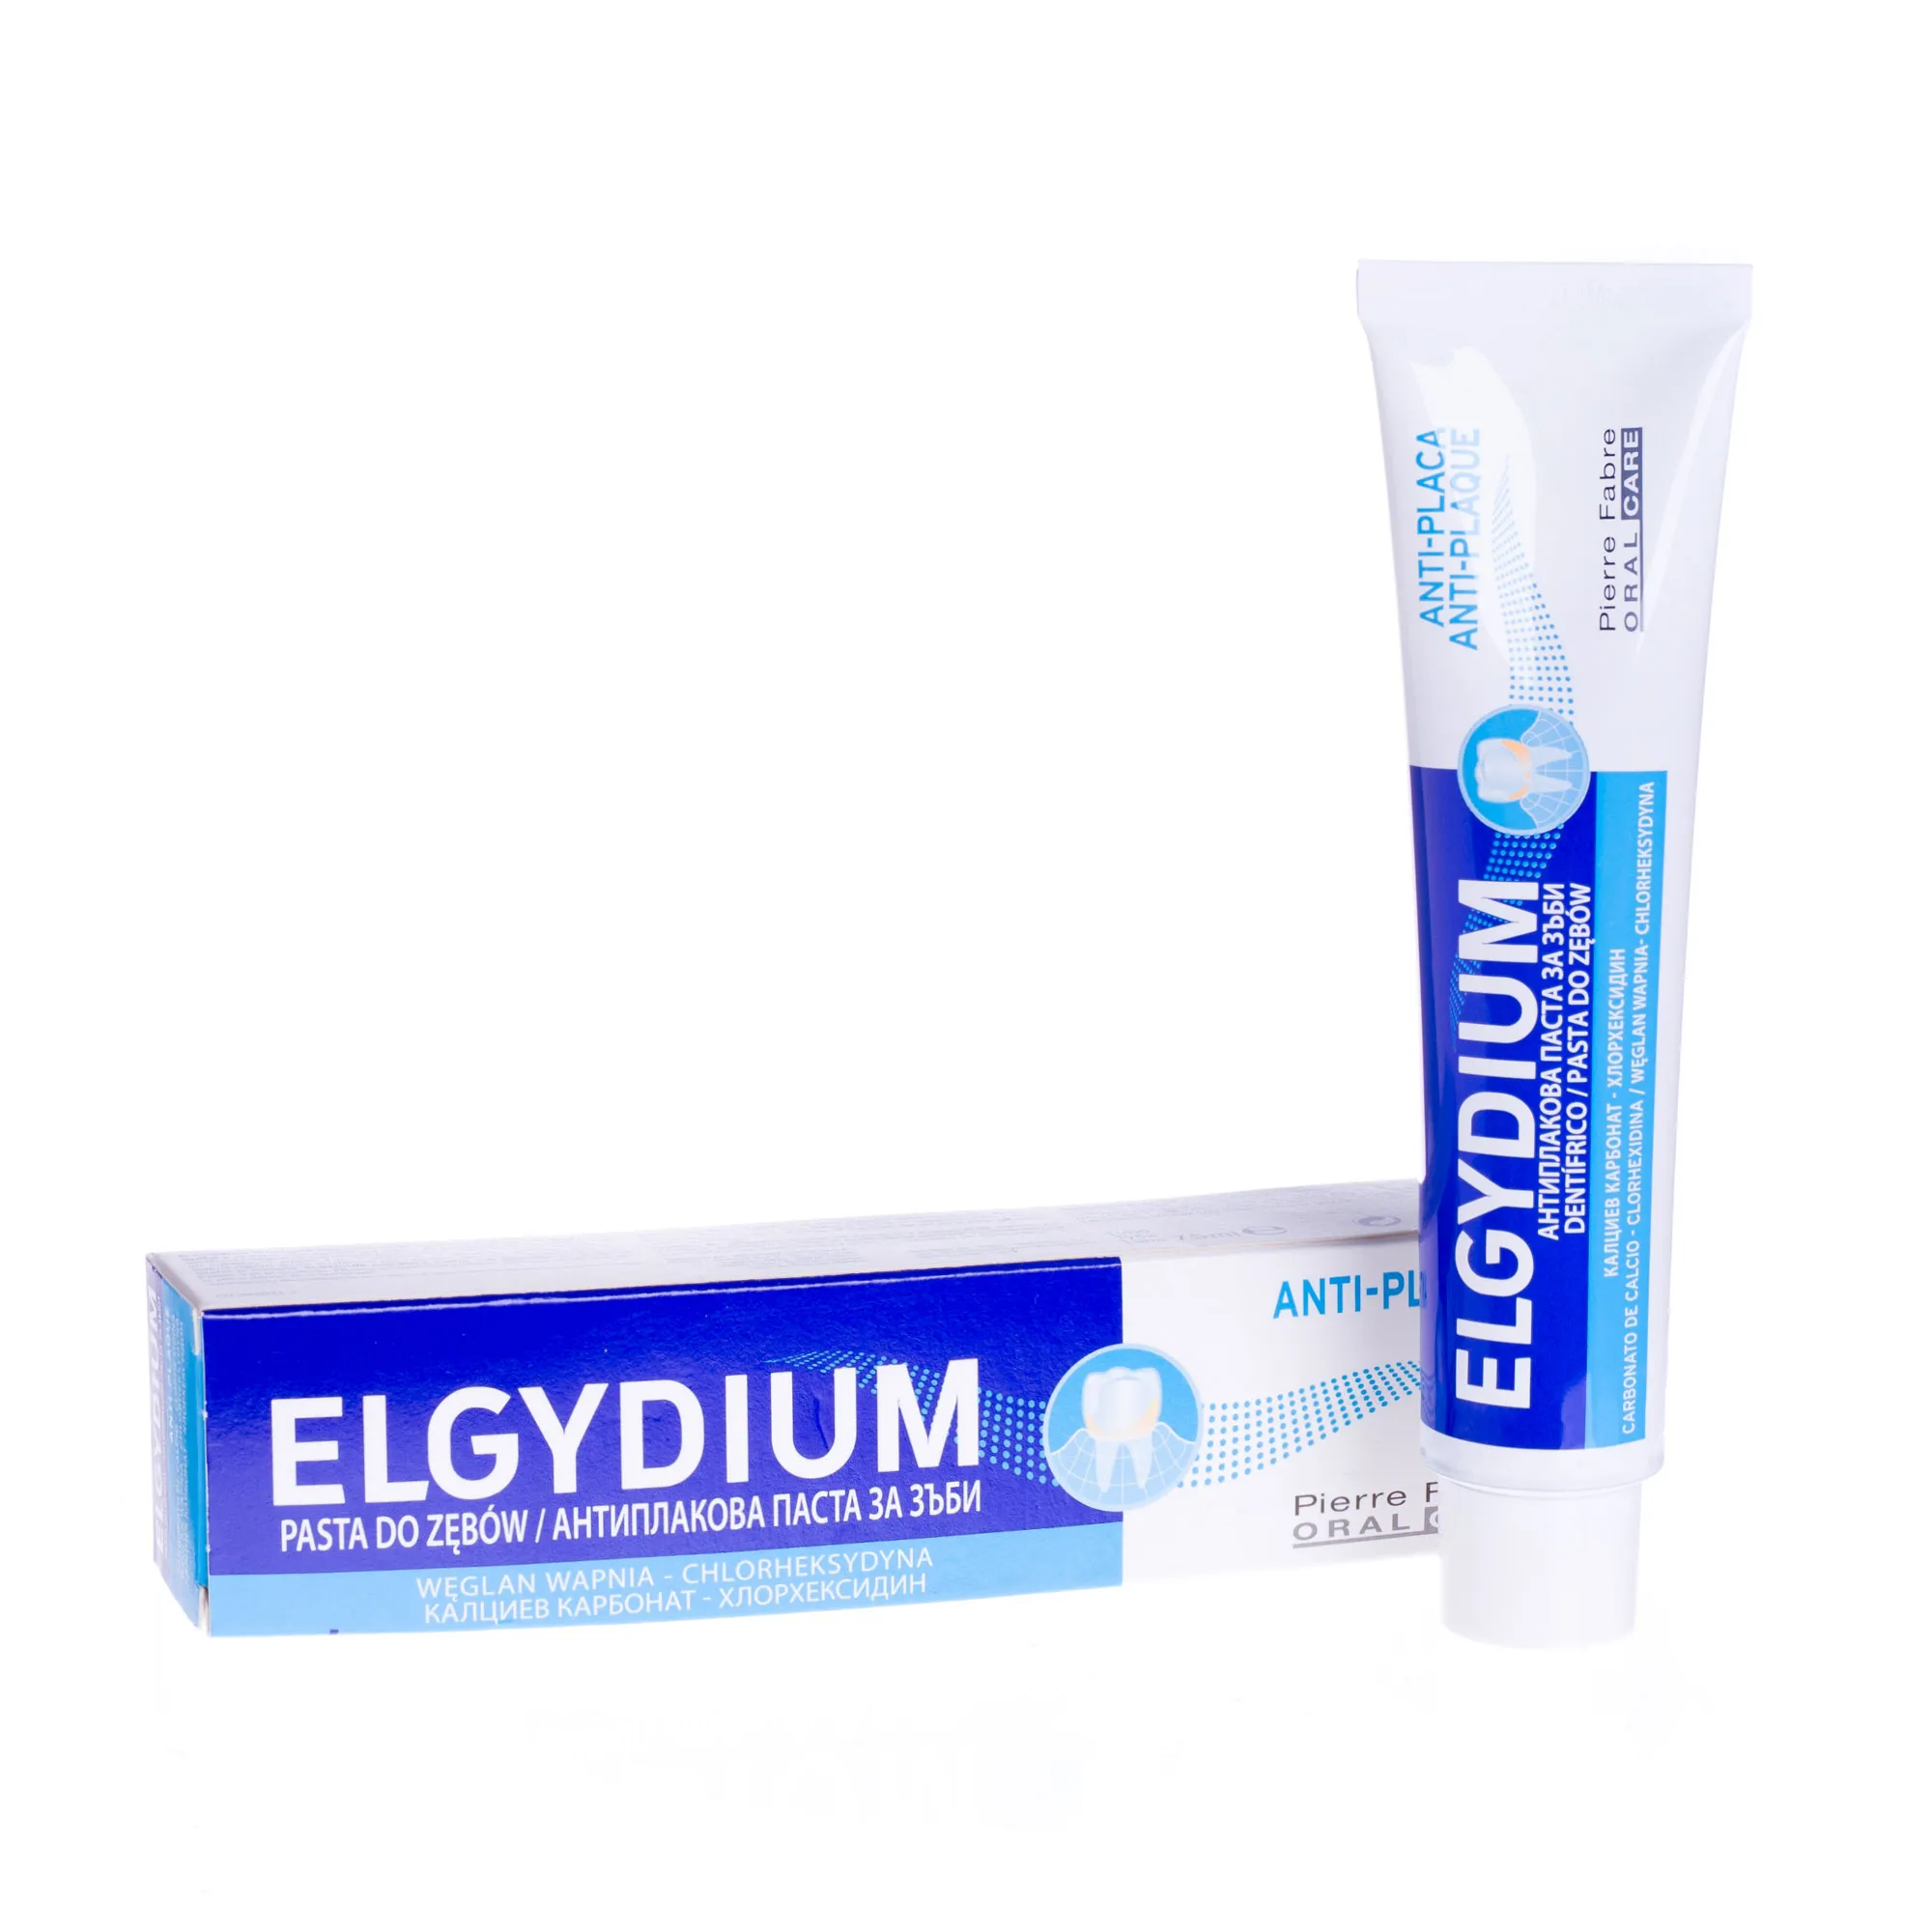 Elgydium Anit-Plaque, antybakteryjna pasta do zębów, 75 ml